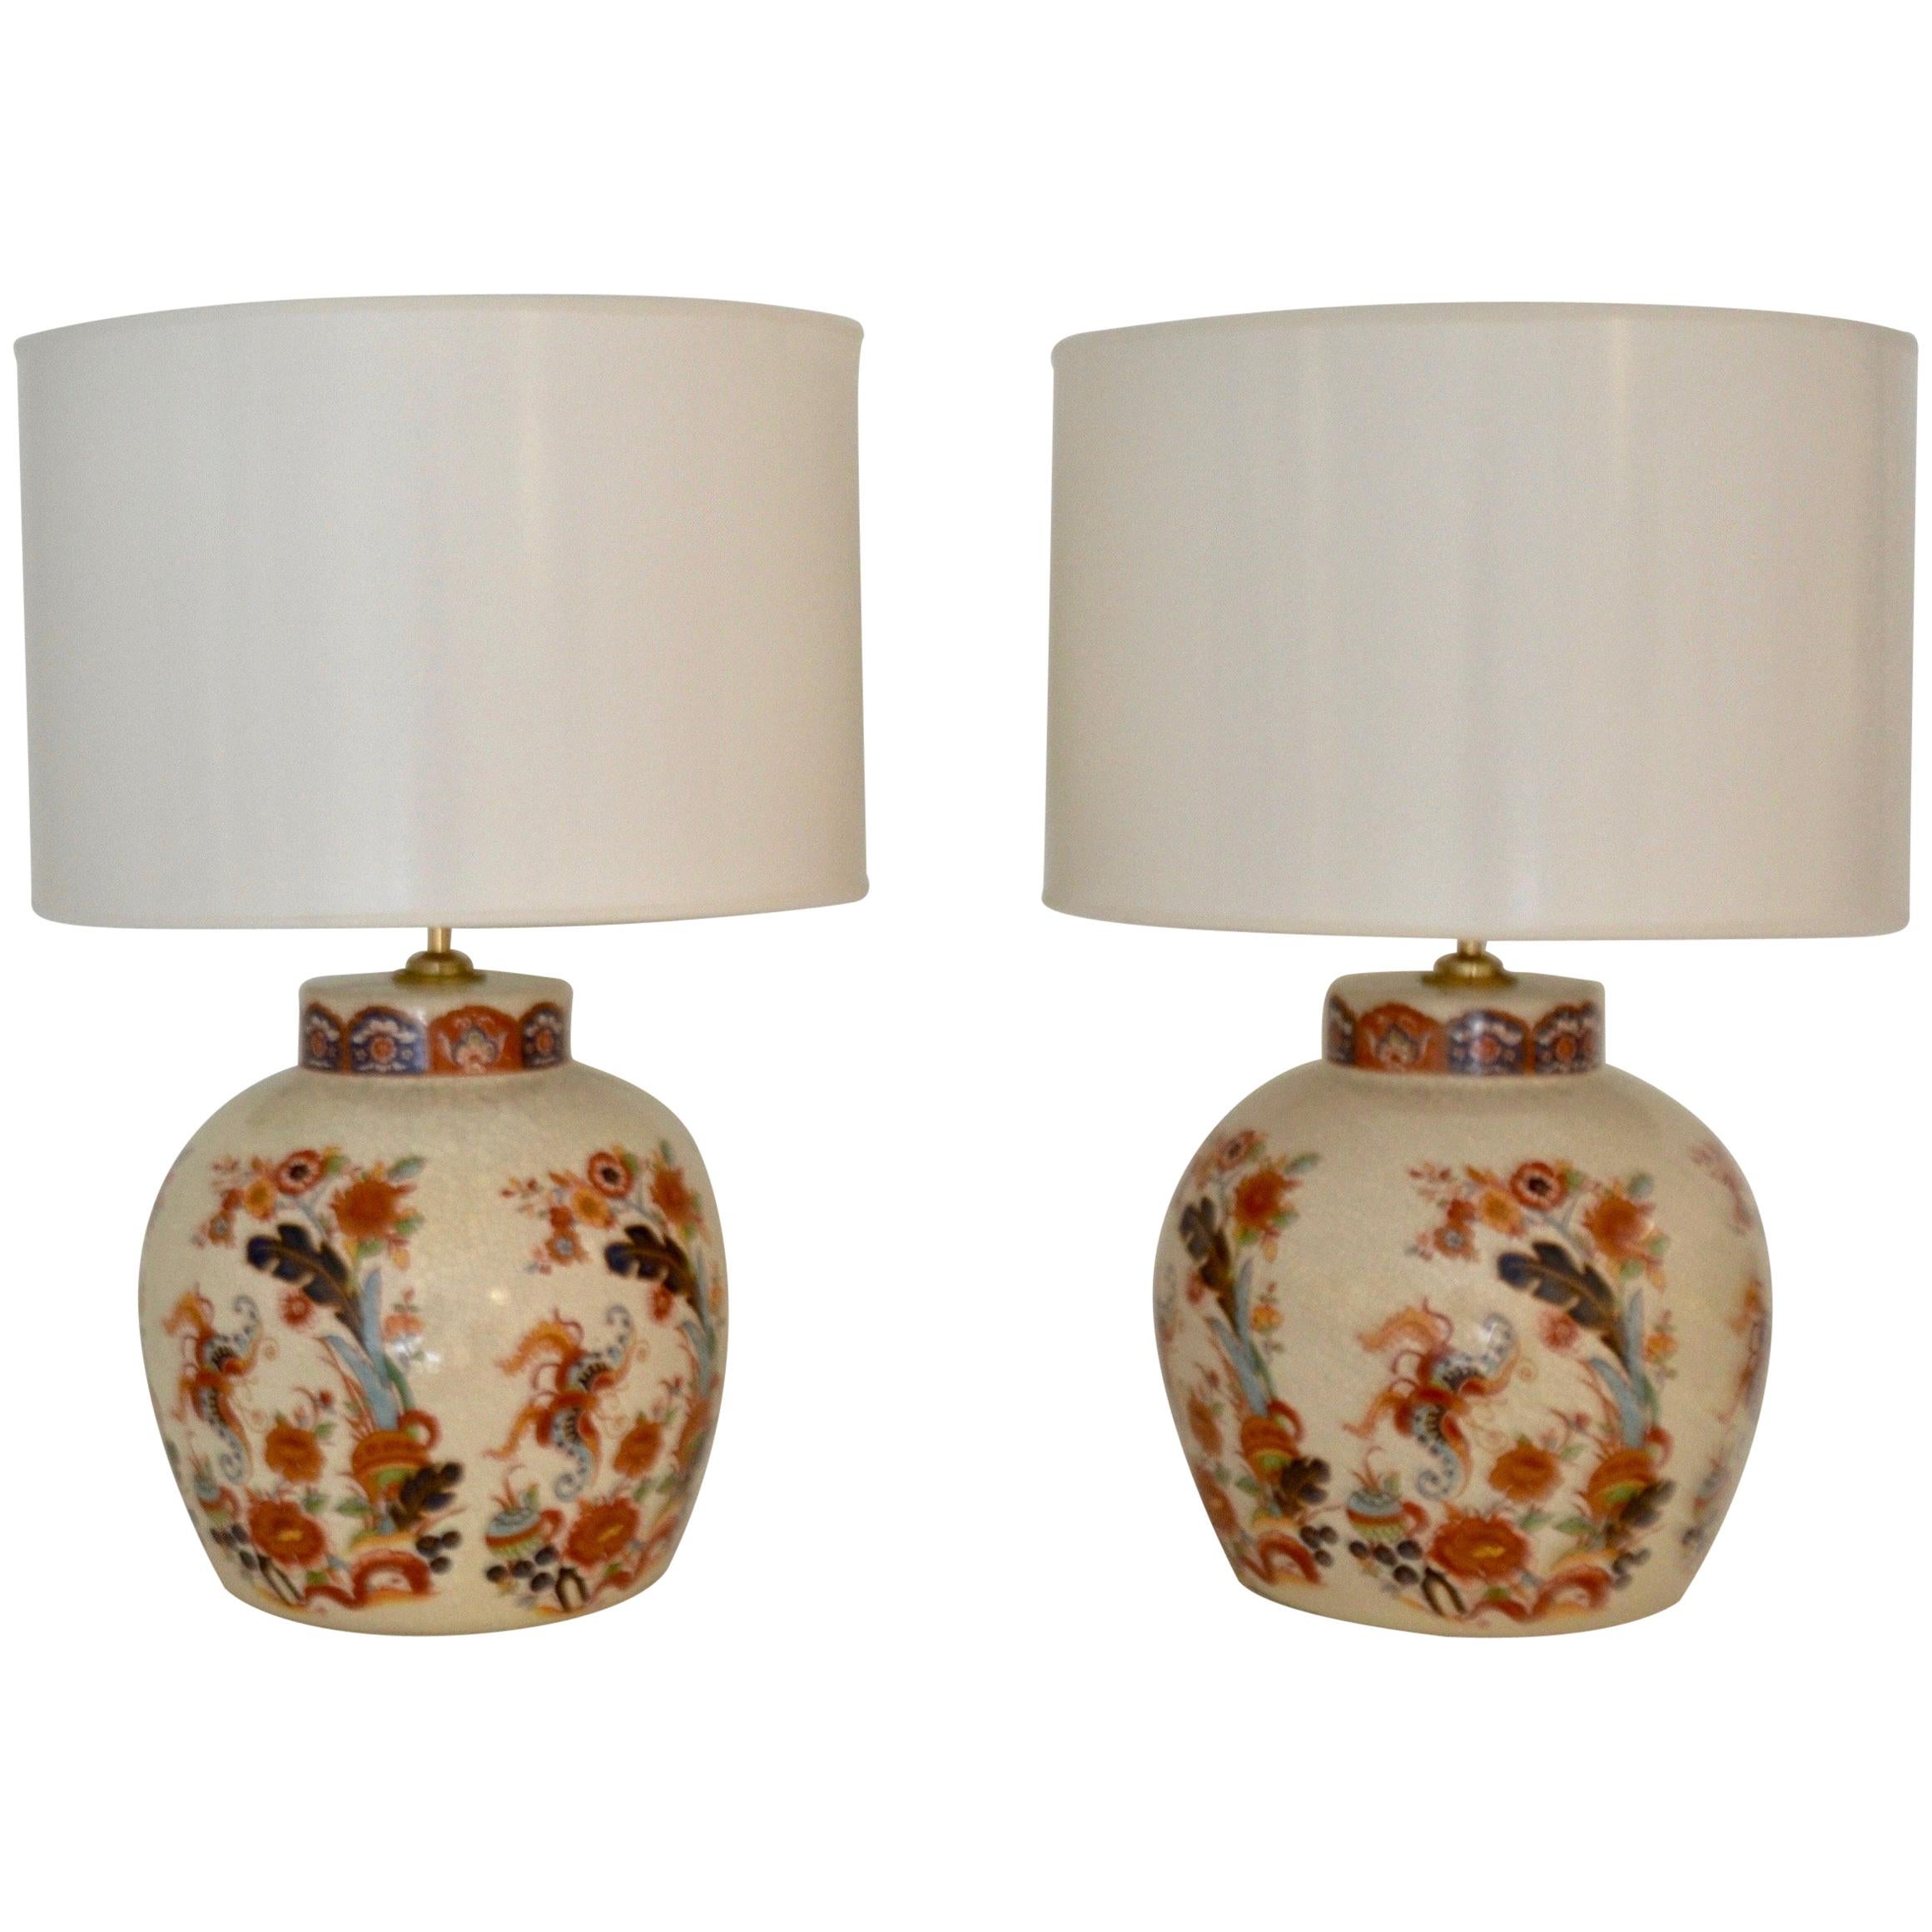 Pair of Ceramic Crackle Glazed Jar Form Table Lamps For Sale